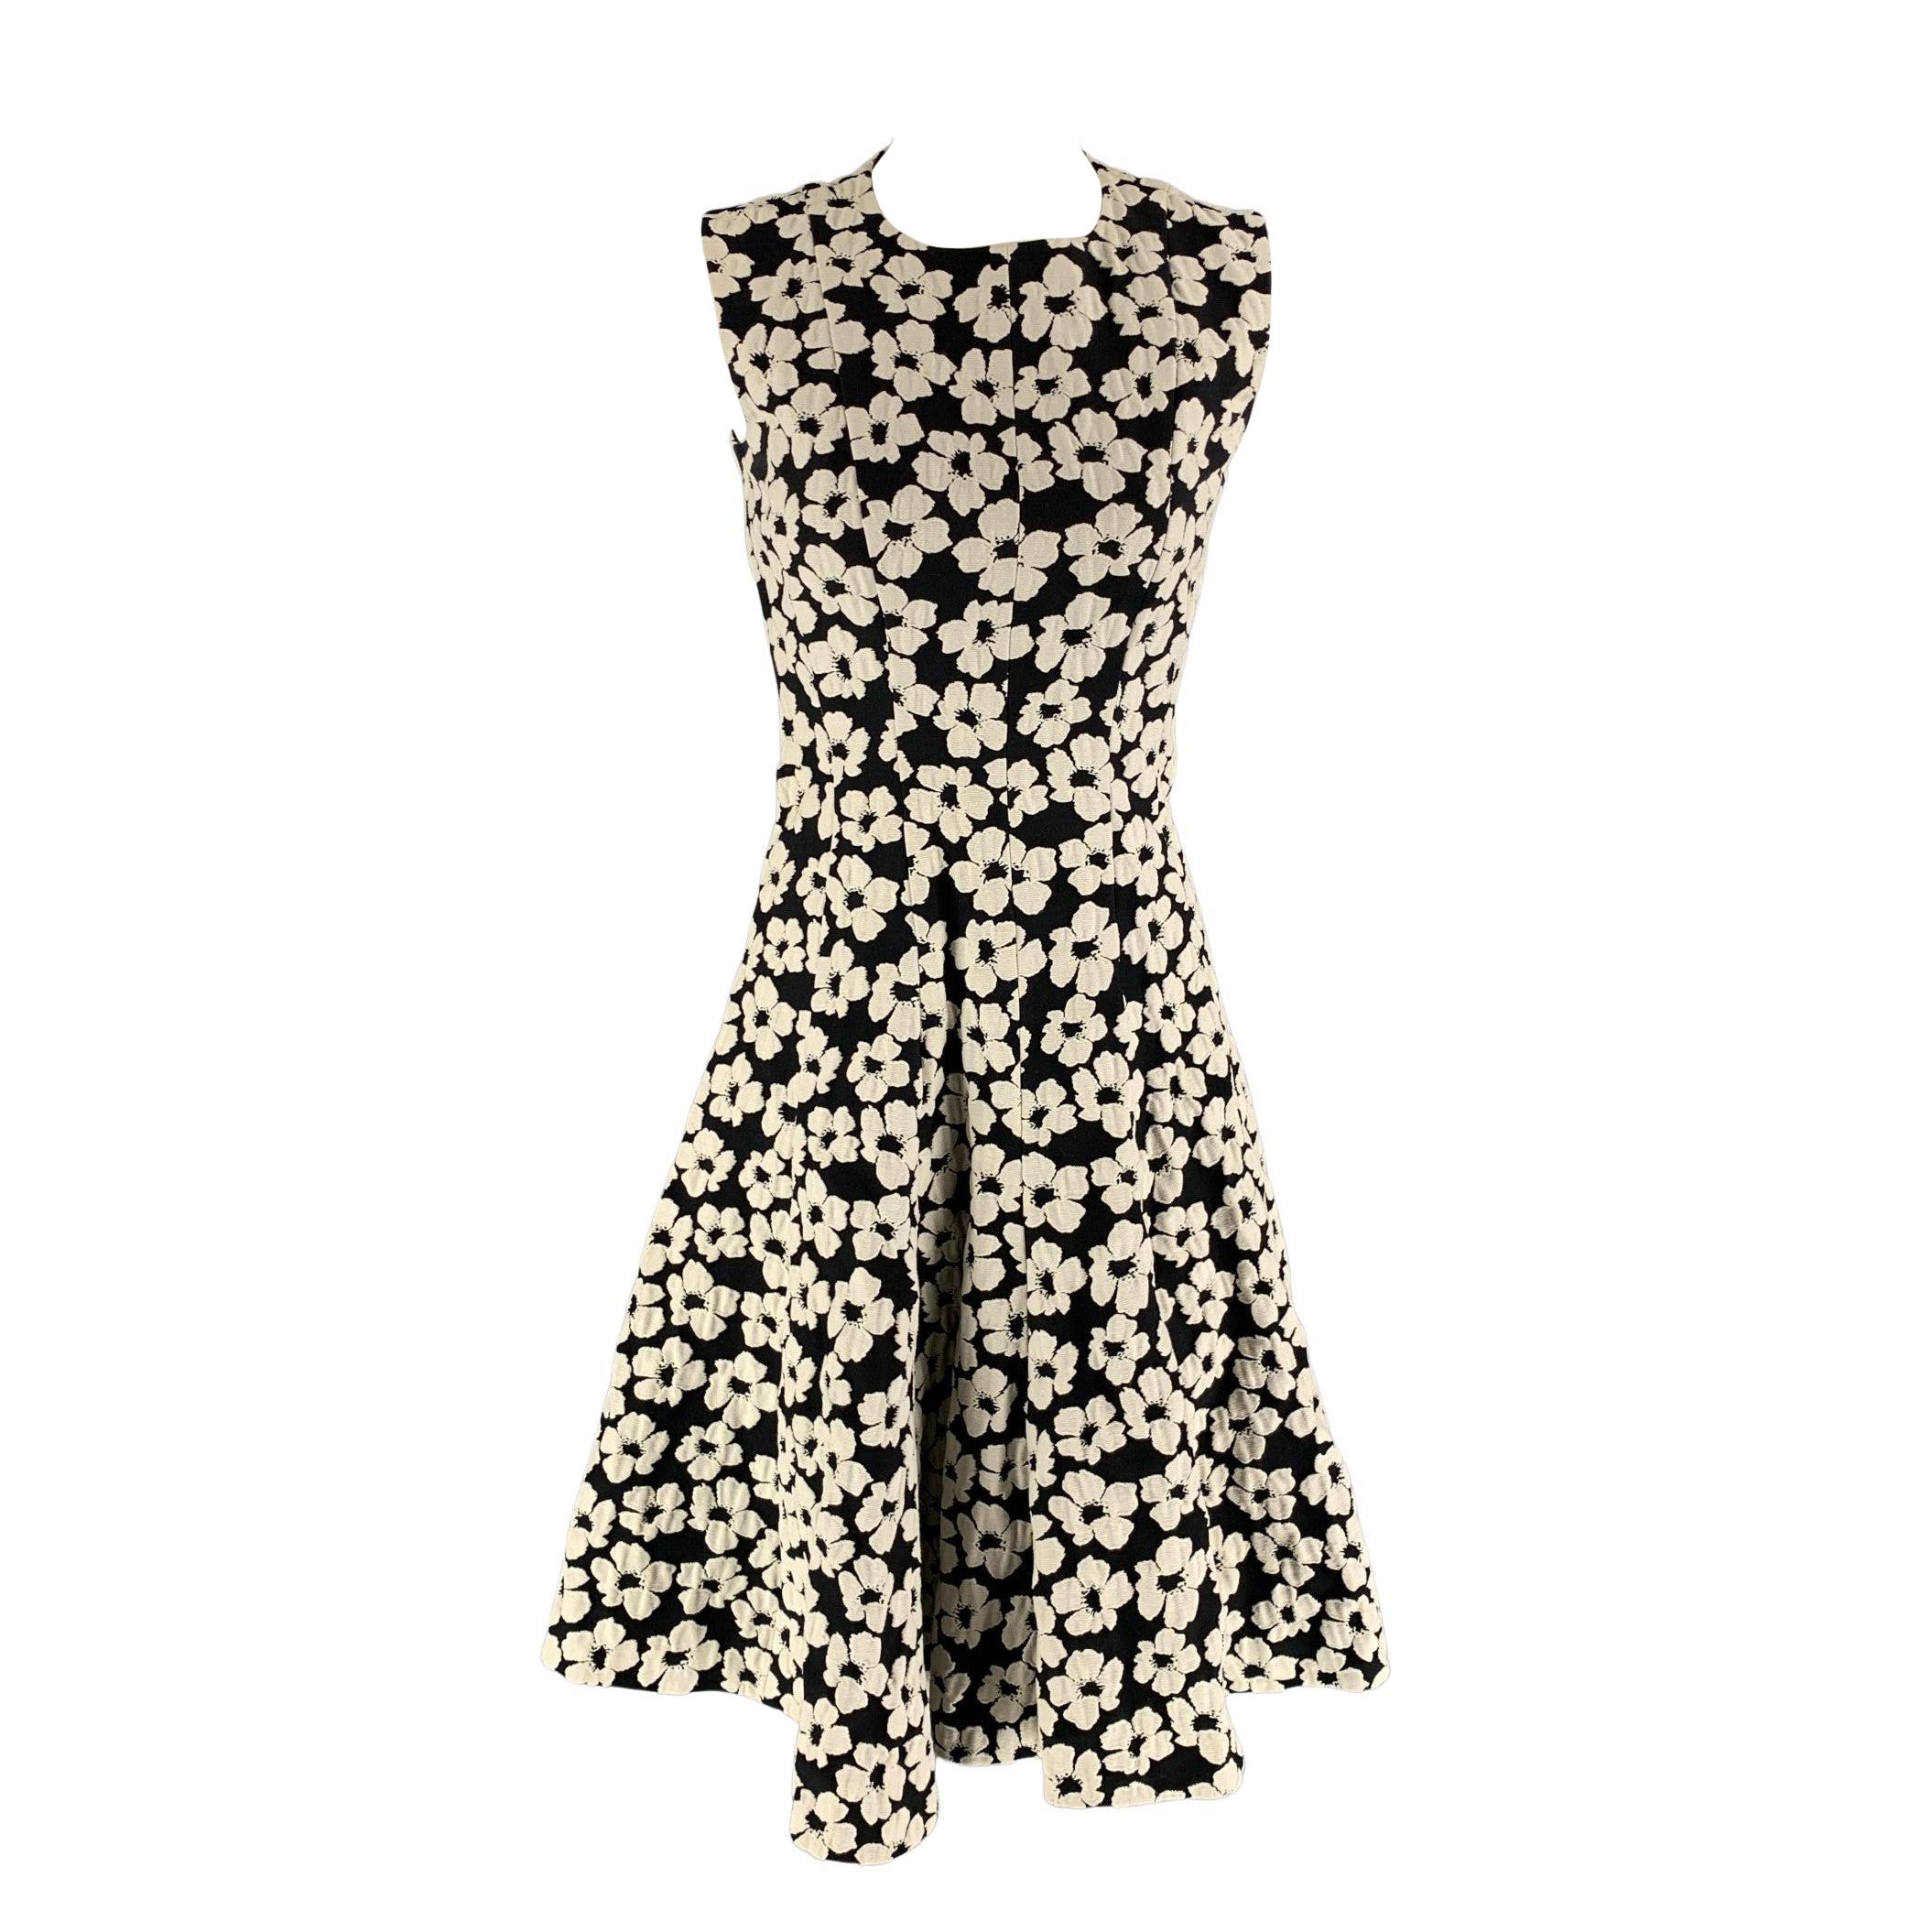 CAROLINA HERRERA Black & White Cotton Blend Floral Mid-Calf Dress